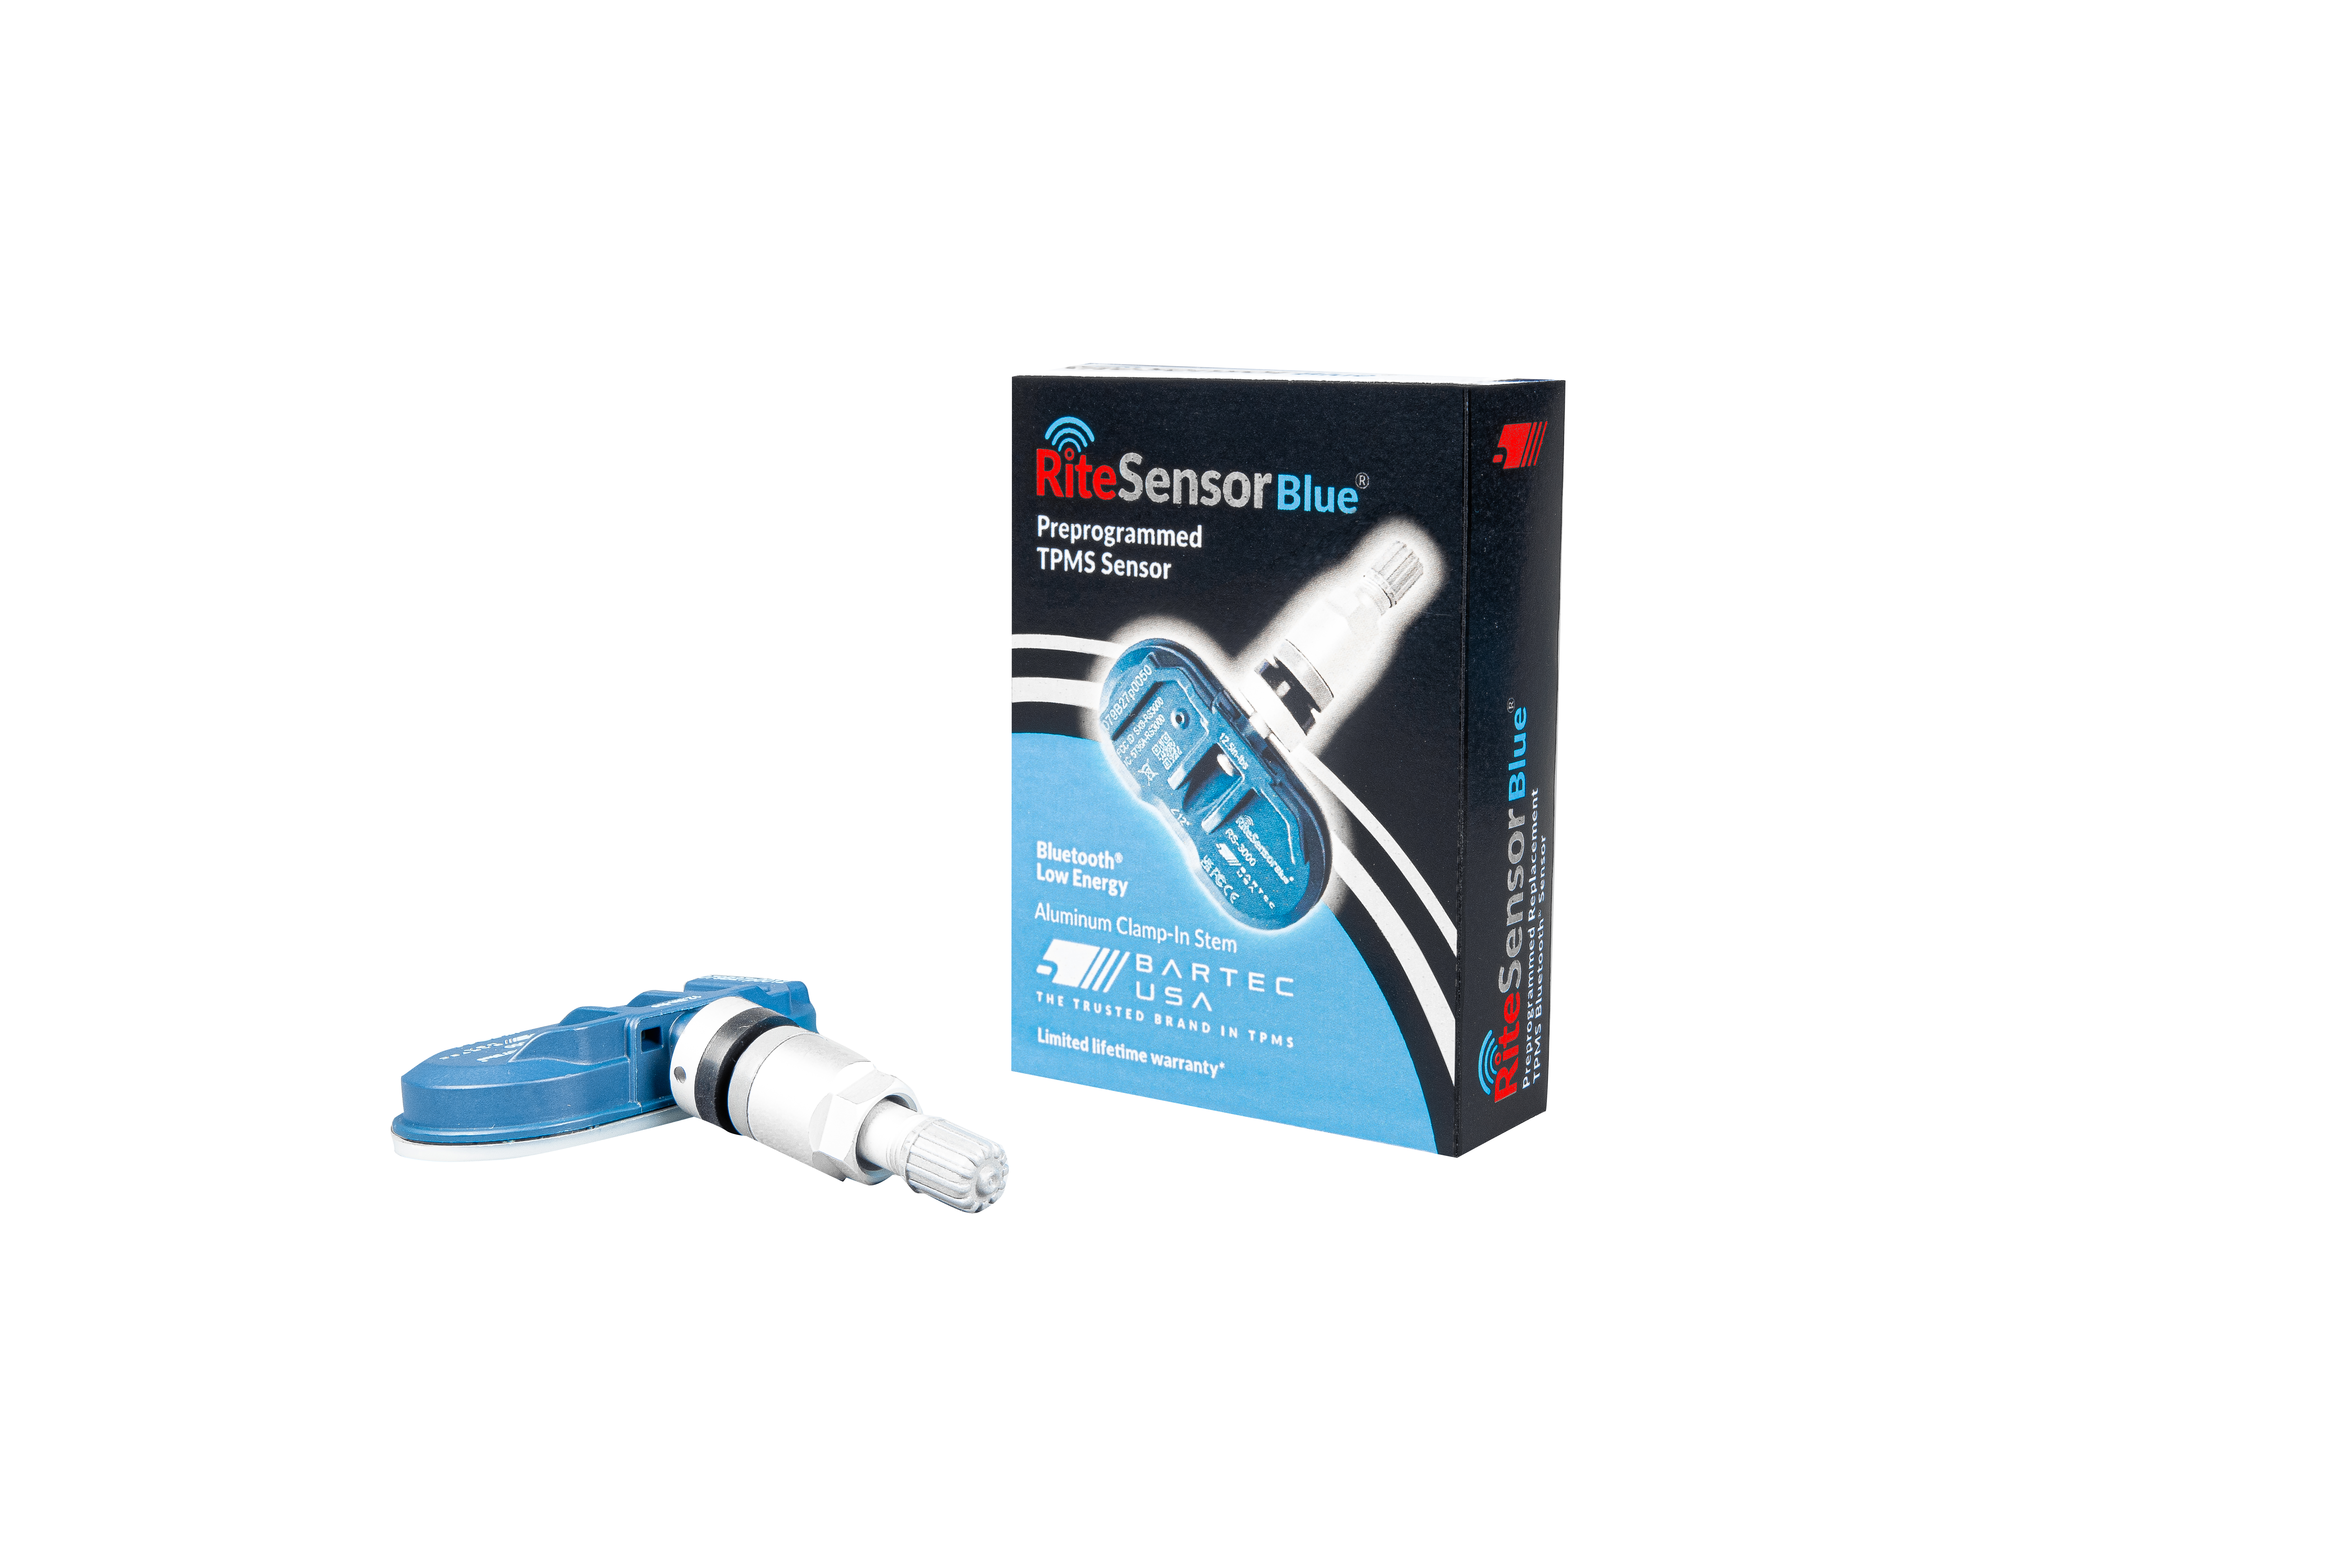 Bartec USA - RITE-SENSOR Blue - TPMS Sensor for Bluetooth TPMS w/Graphite Aluminum clamp-in valve stem, box of 10 -  RS-3000-10G